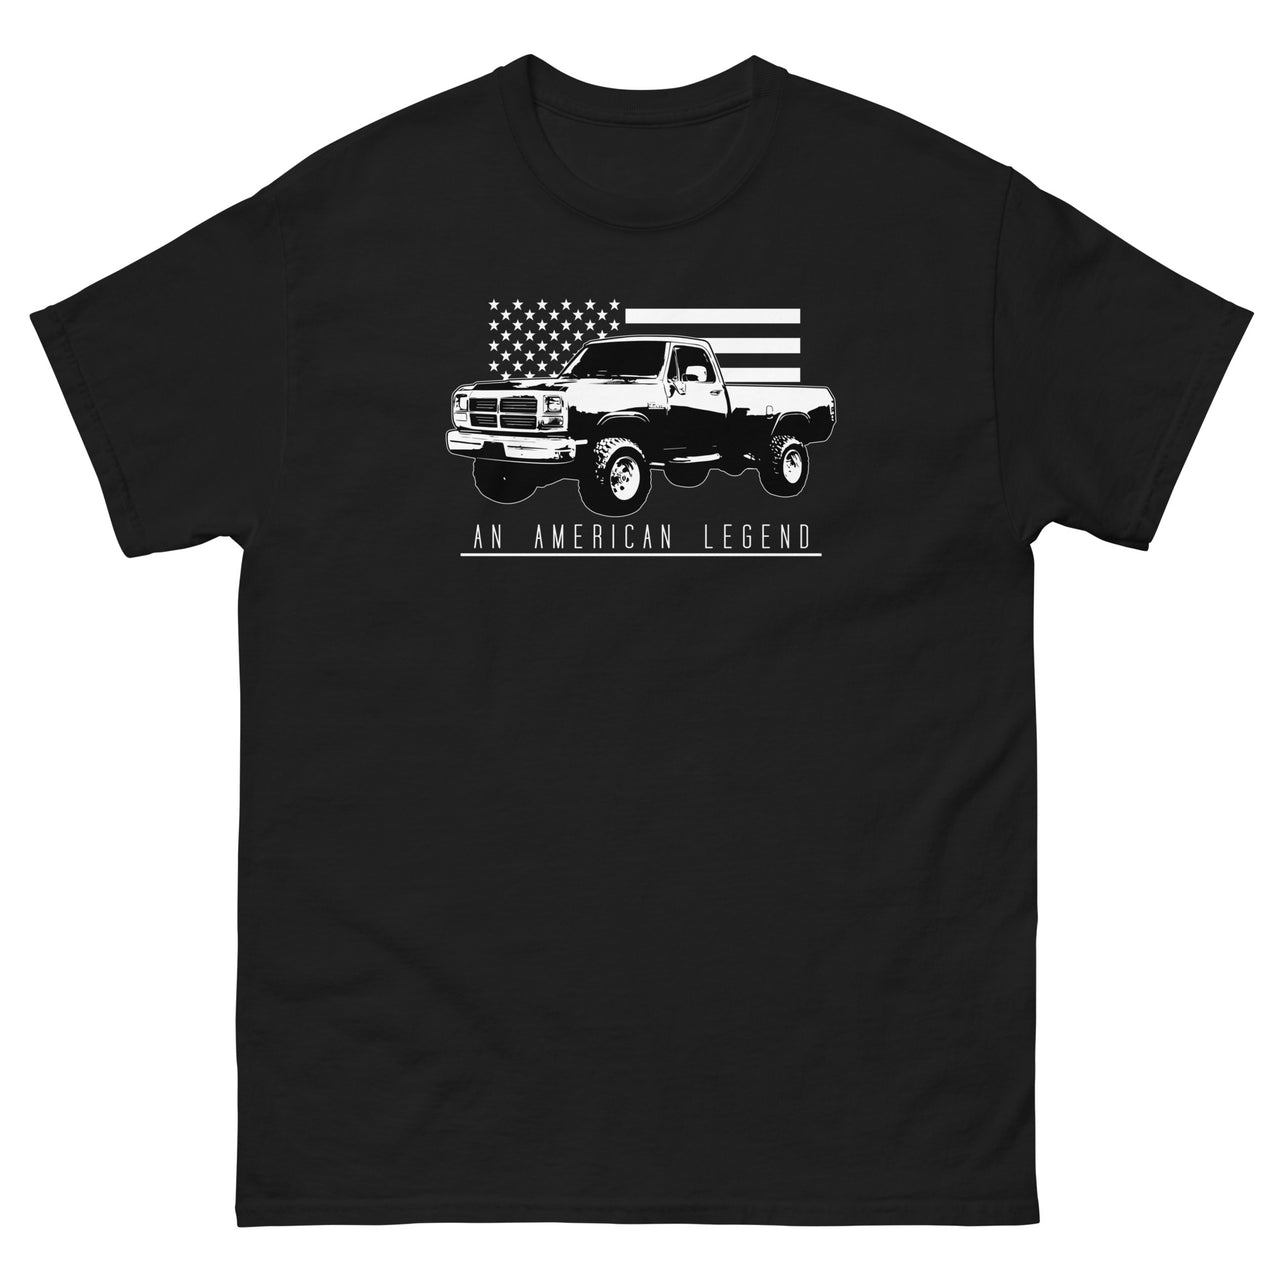 First Gen Truck T-Shirt in black